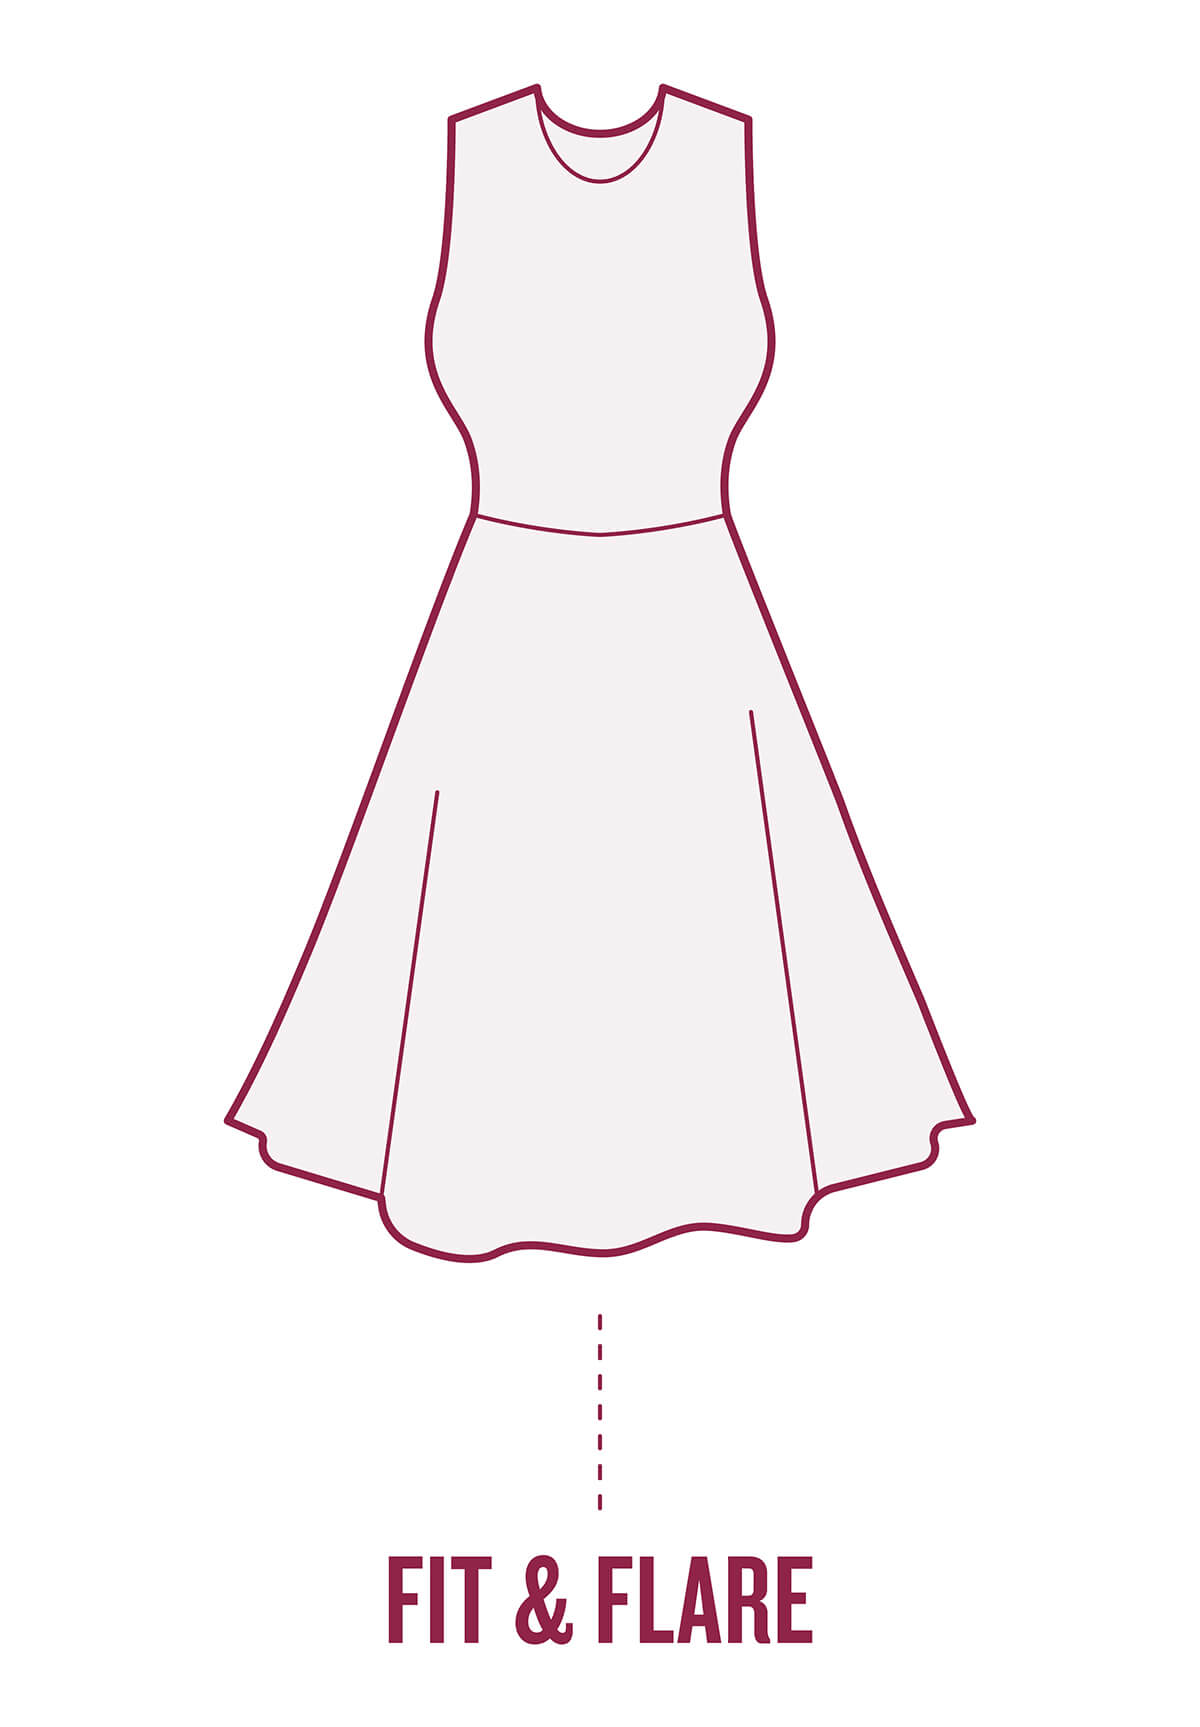 https://www.stitchfix.com/women/blog/wp-content/uploads/2017/17_01_27_W-FINAL-NYJan17-Blog-Refresh-Illustrations-DRESSES_B1.1.jpg